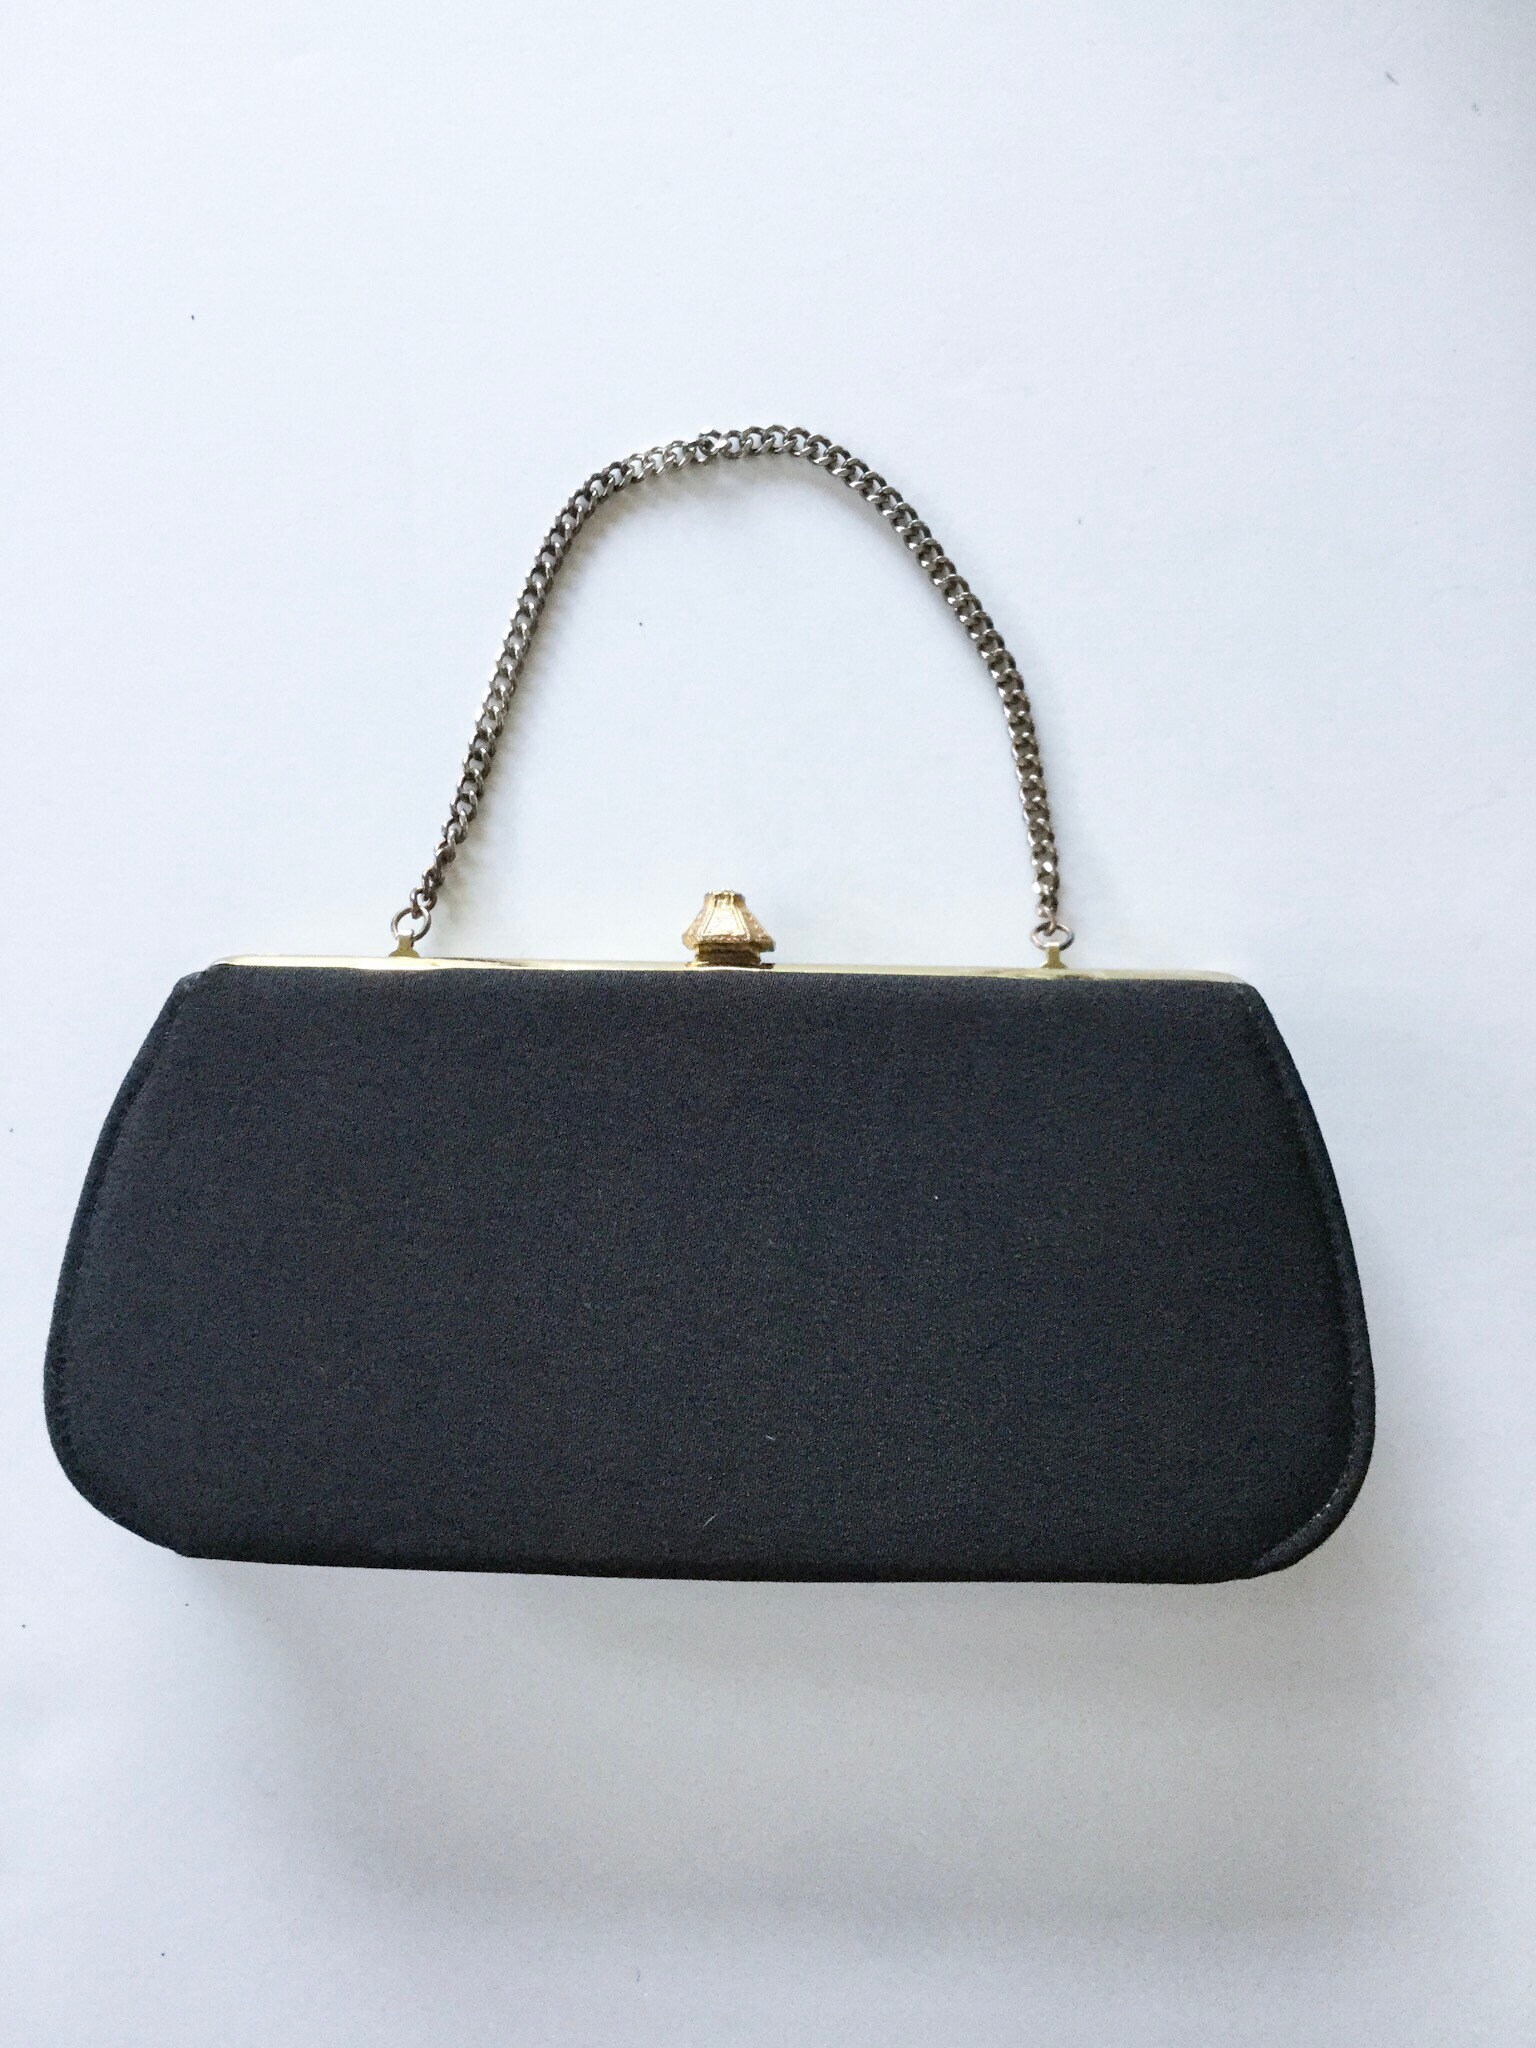 1920s Vintage Beaded Clutch Evening Bags Flapper Handbag Clutch for Women  Formal Wedding 1920s Party Accessories(Black): Handbags: Amazon.com